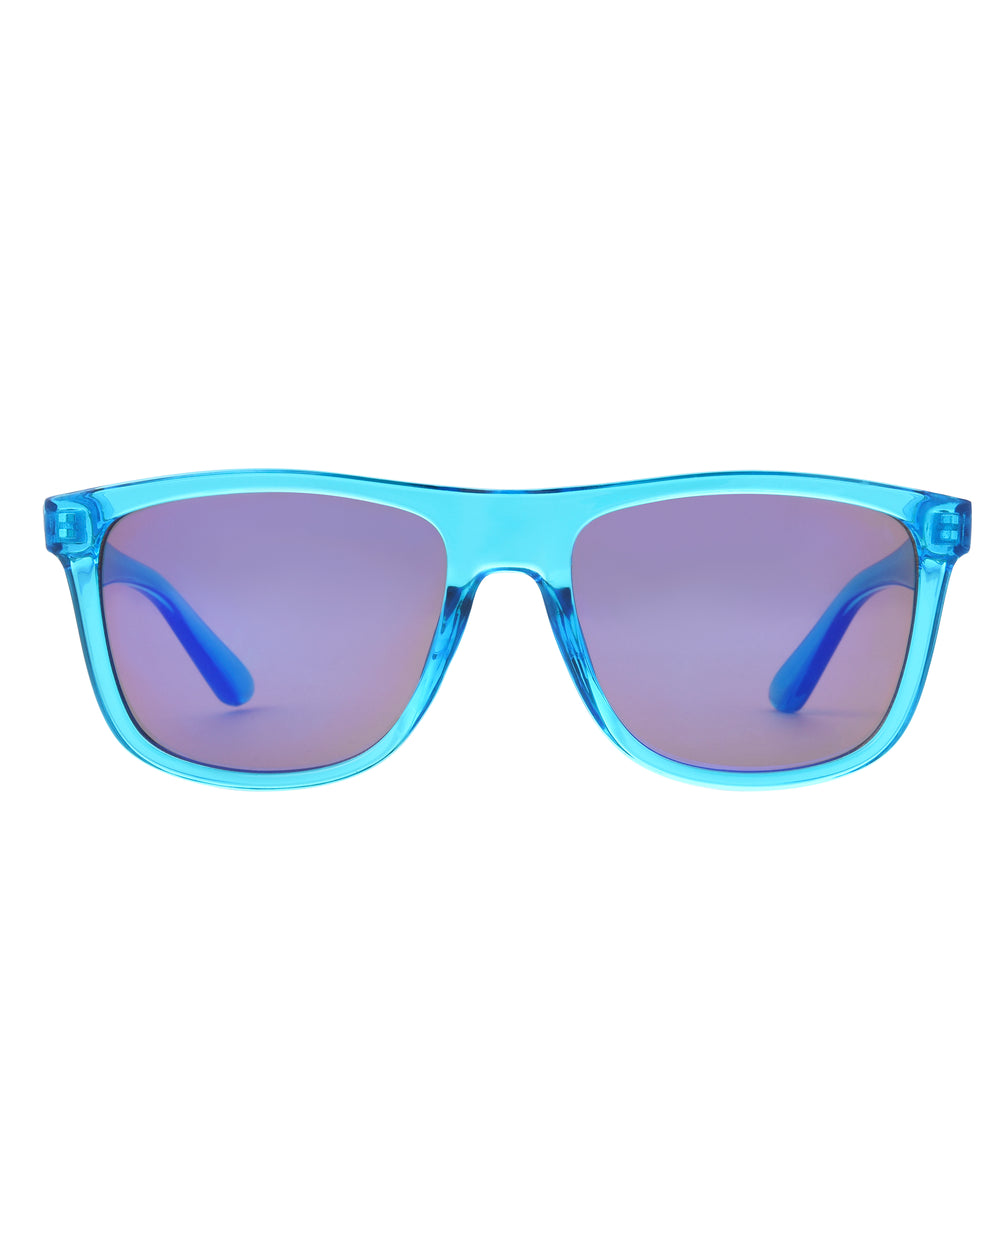 Talise Way-Style Frame Sunglasses - Aqua/Crystal